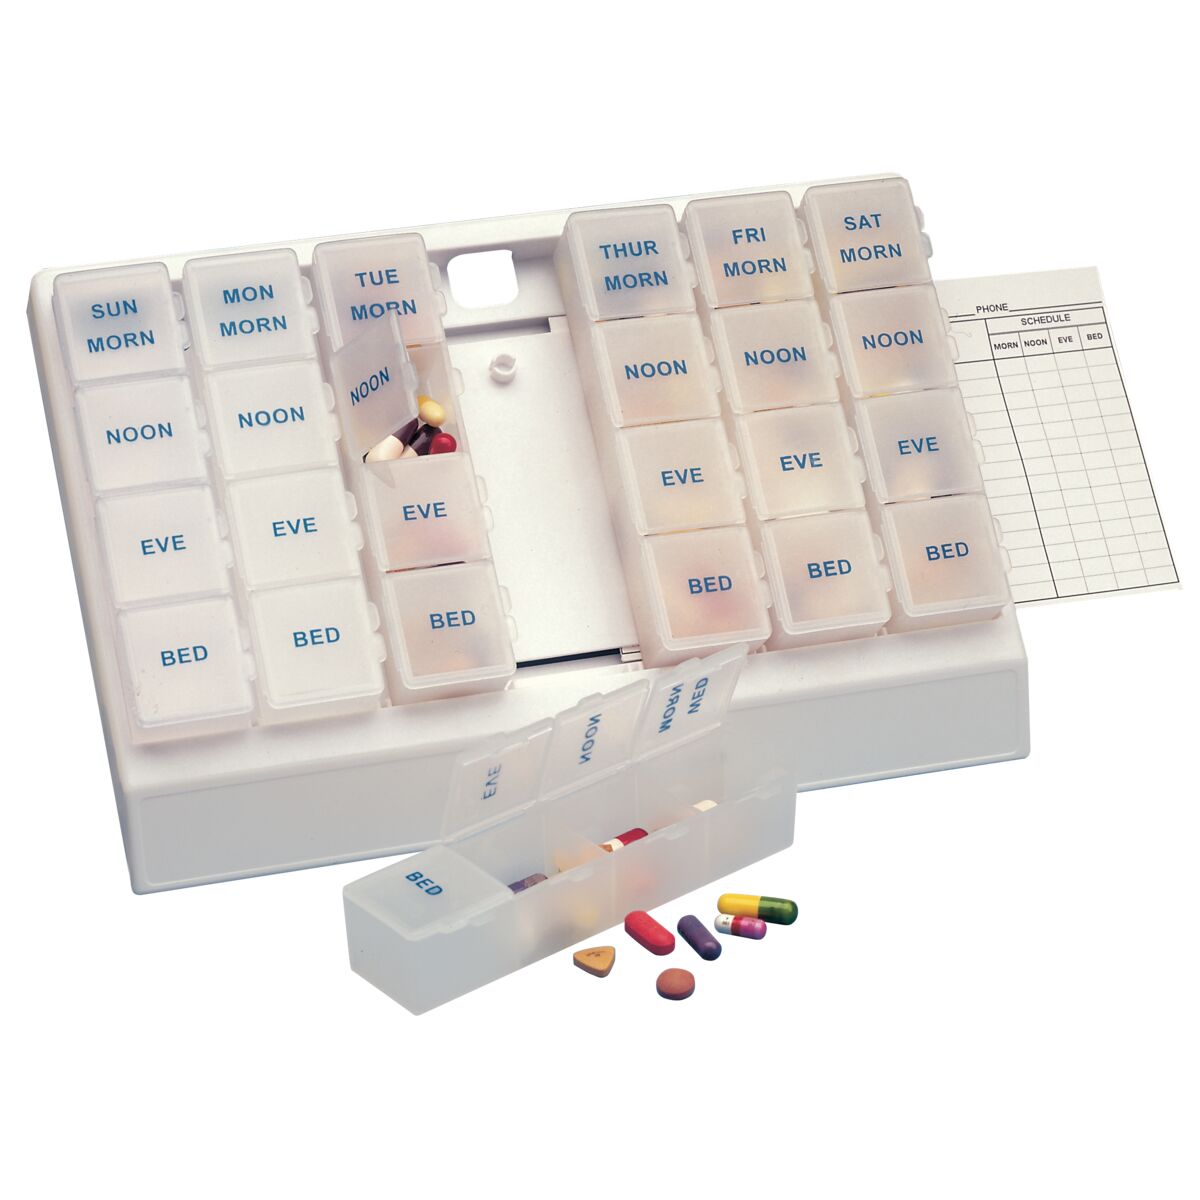 ATB Daily Pill Box Am PM Organizer Case Medicine Storage Vitamin Tablet Holder New